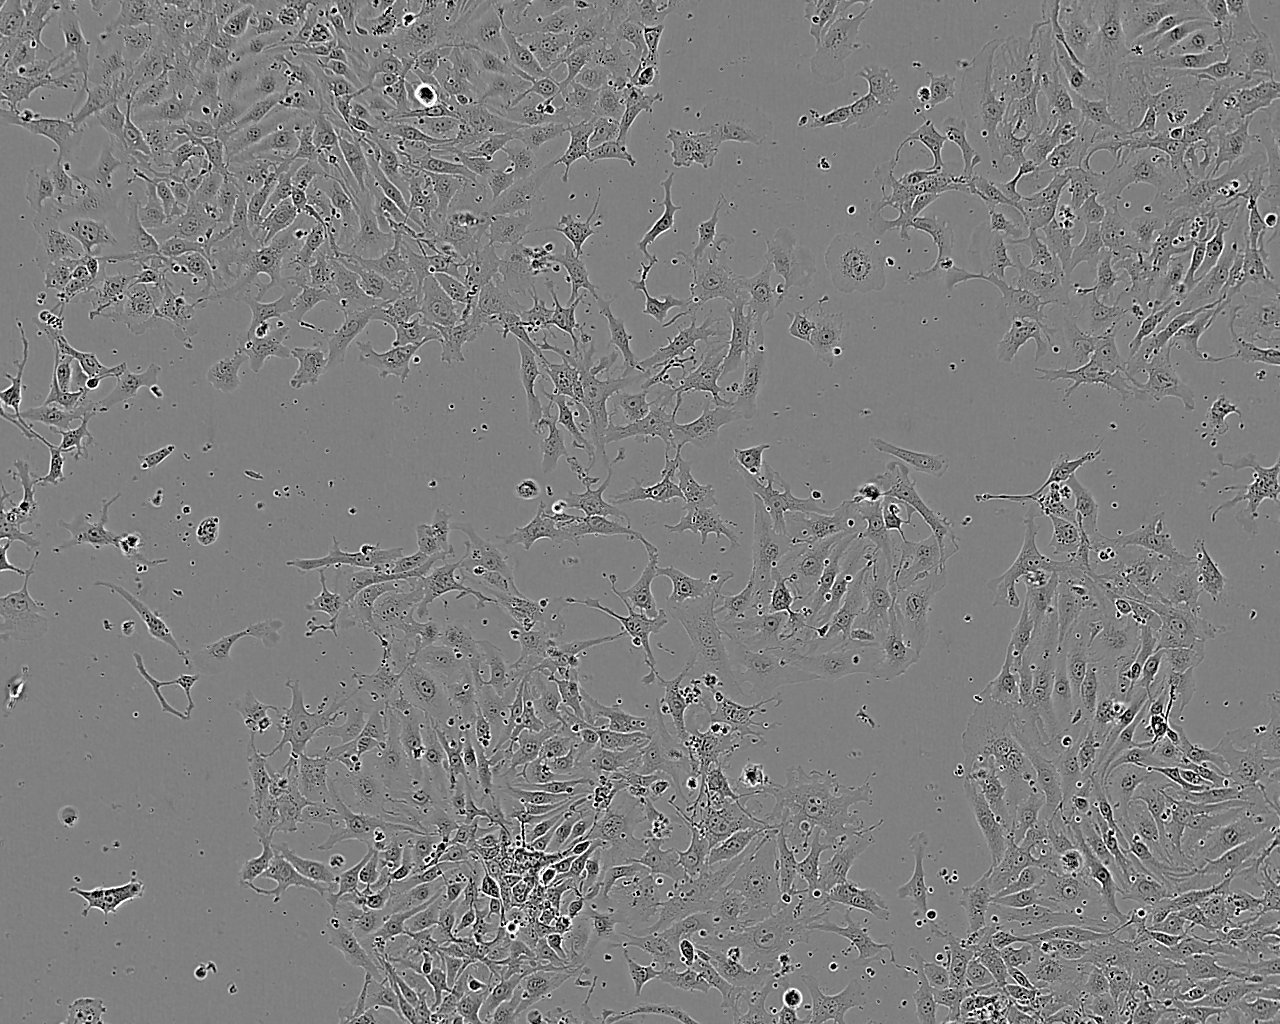 PK-15 epithelioid cells猪肾细胞系